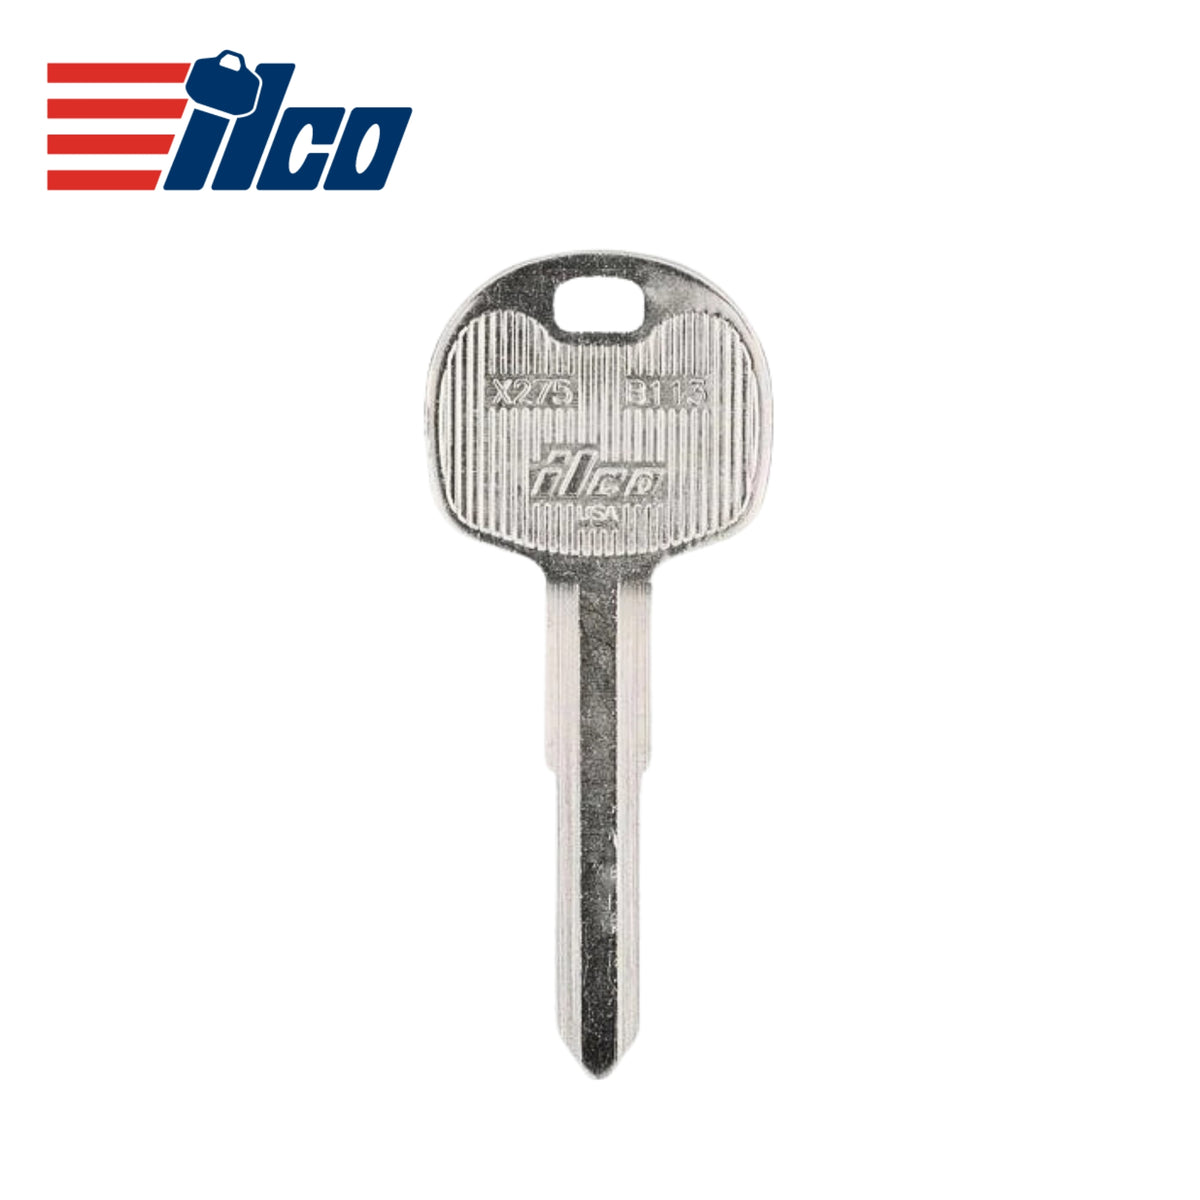 Isuzu - ILCO 2008-2011 Metal Test Key B113/X275 - Royal Key Supply